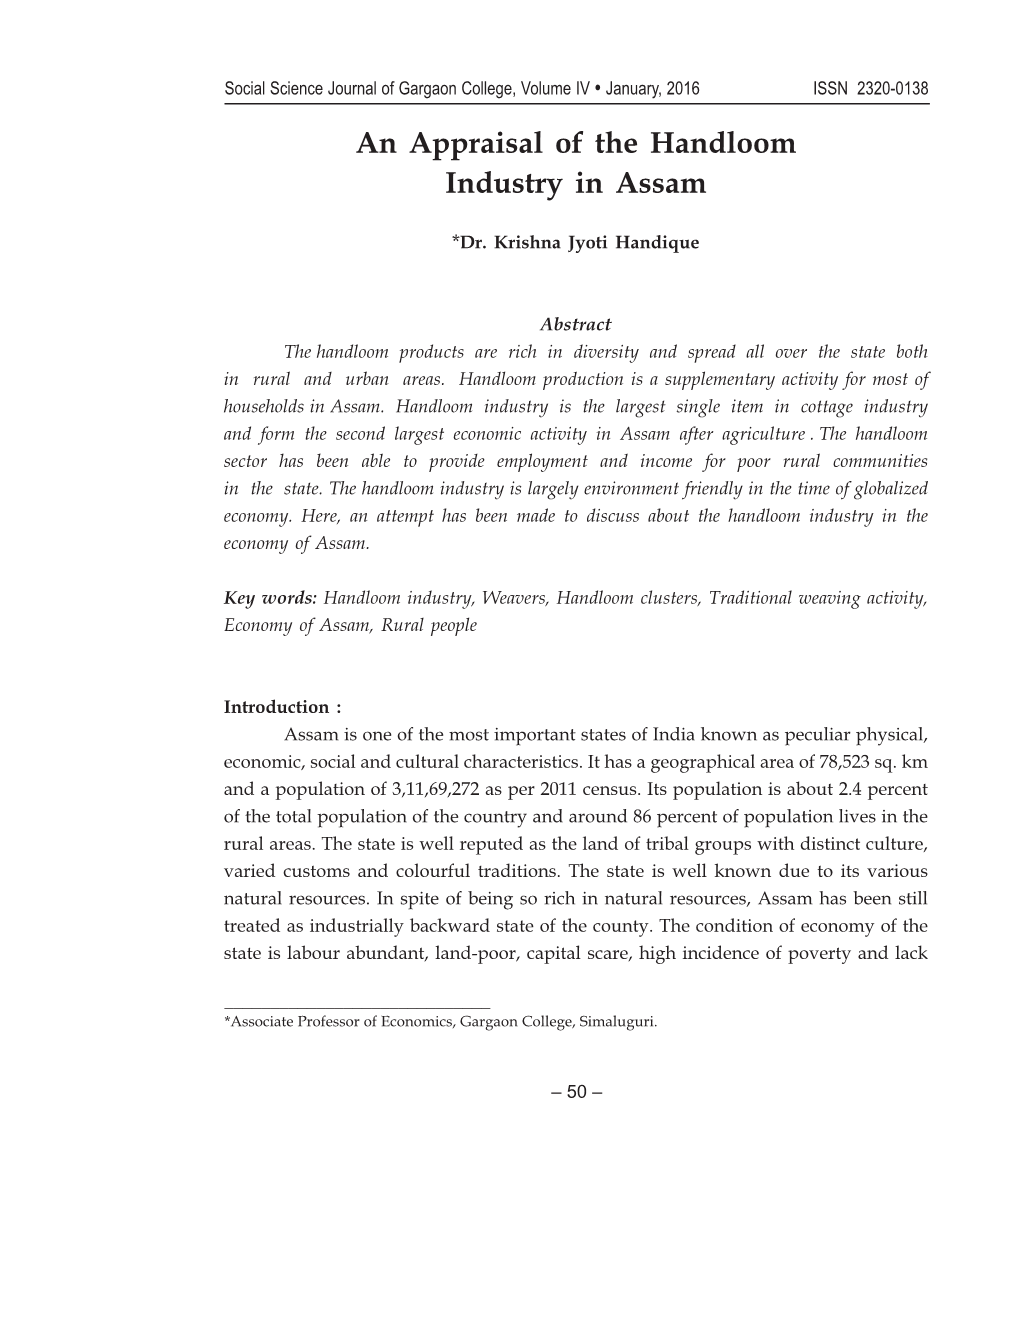 An Appraisal of the Handloom Industry in Assam Dr